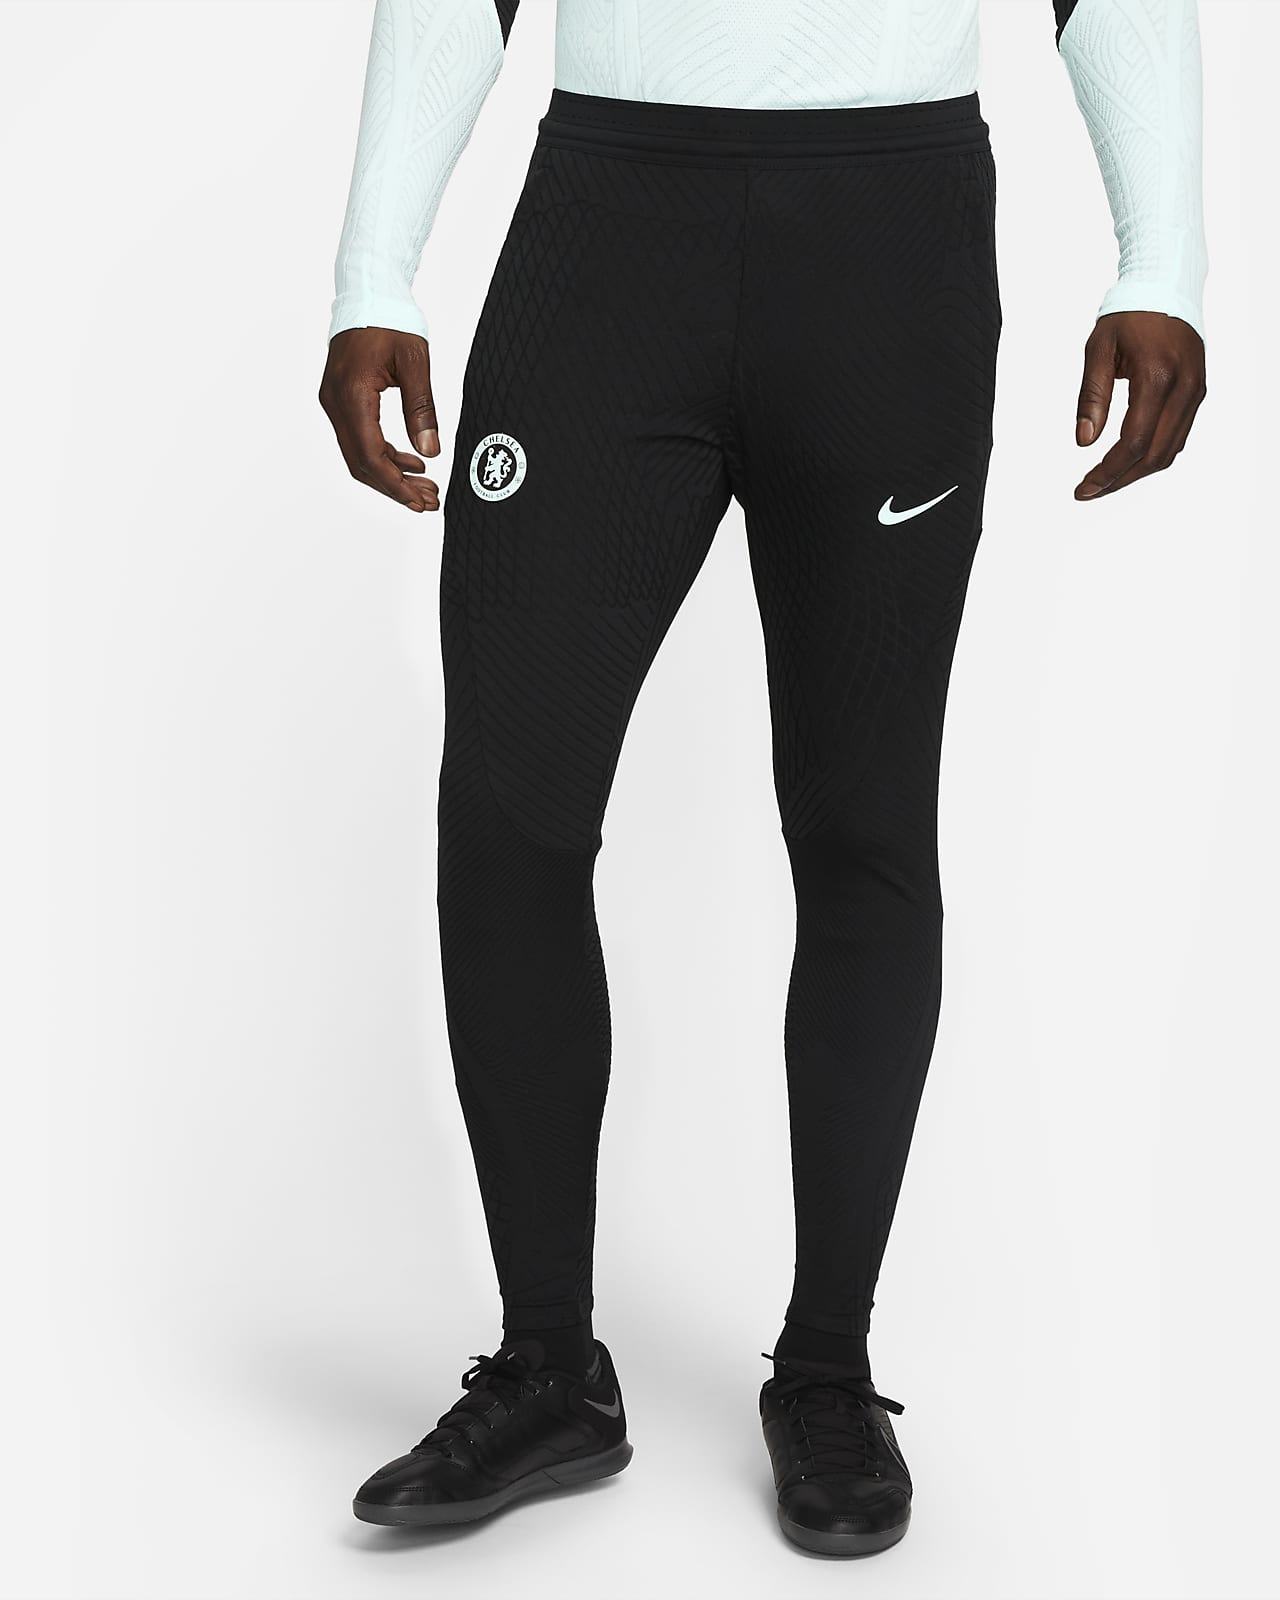 Chelsea F.C. Strike Elite Third Men's Nike Dri-FIT ADV Football Pants